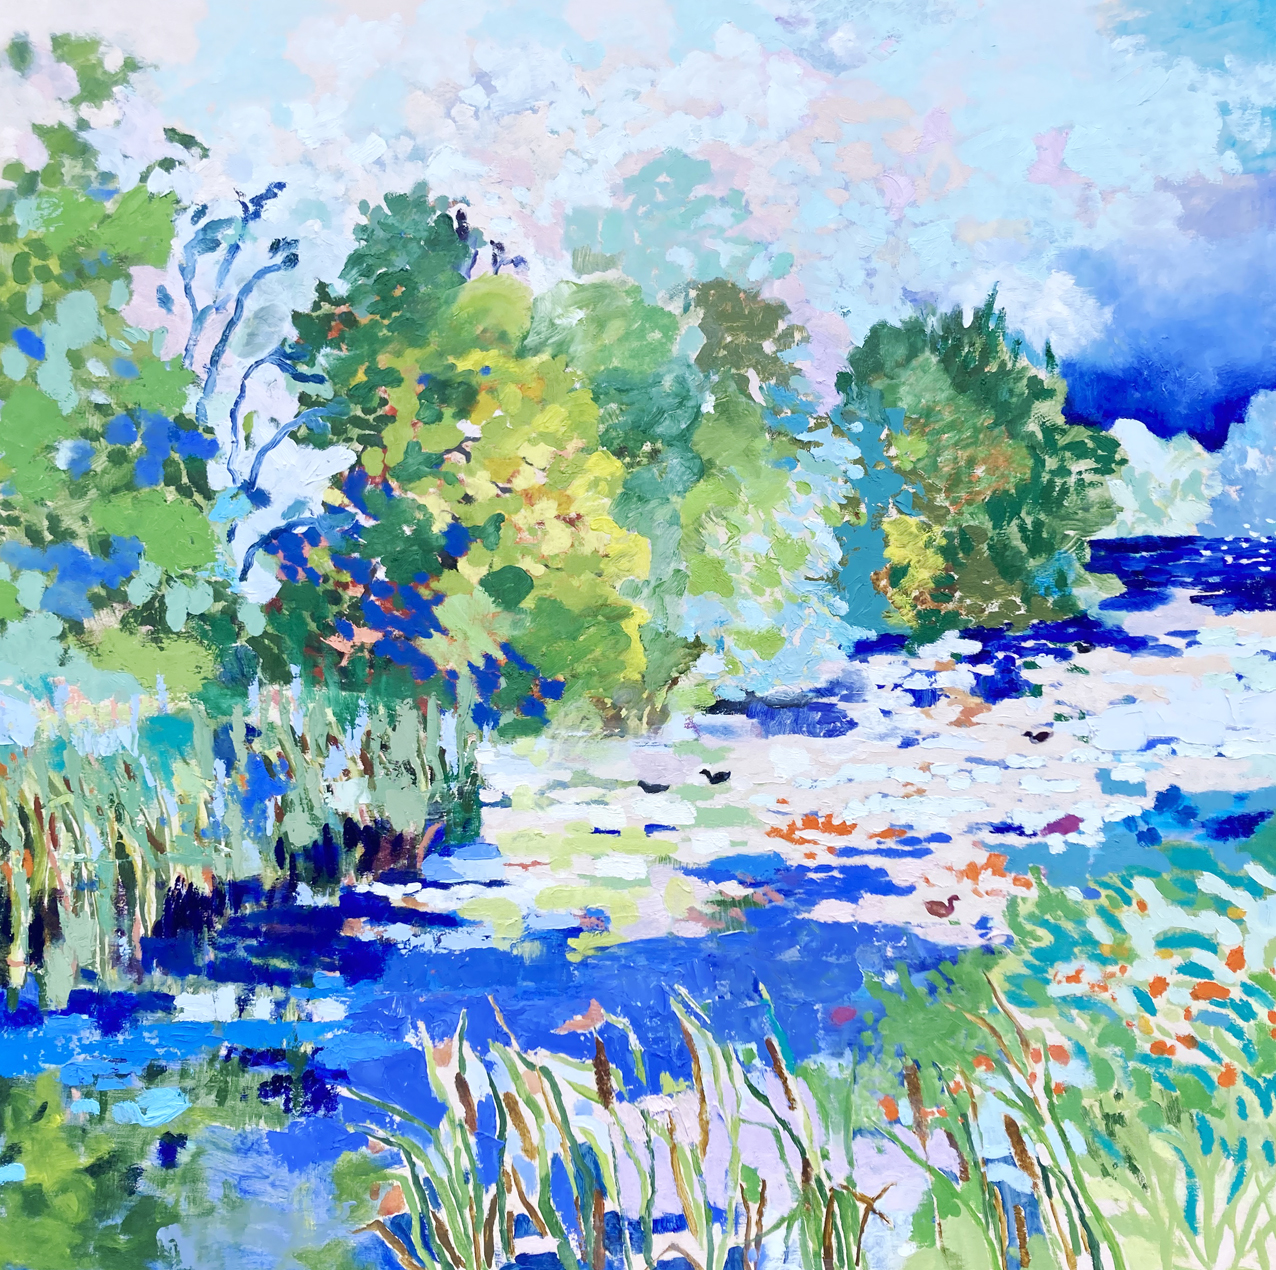 The River at Kedleston Park. Oil on canvas. 100 x 100cm.